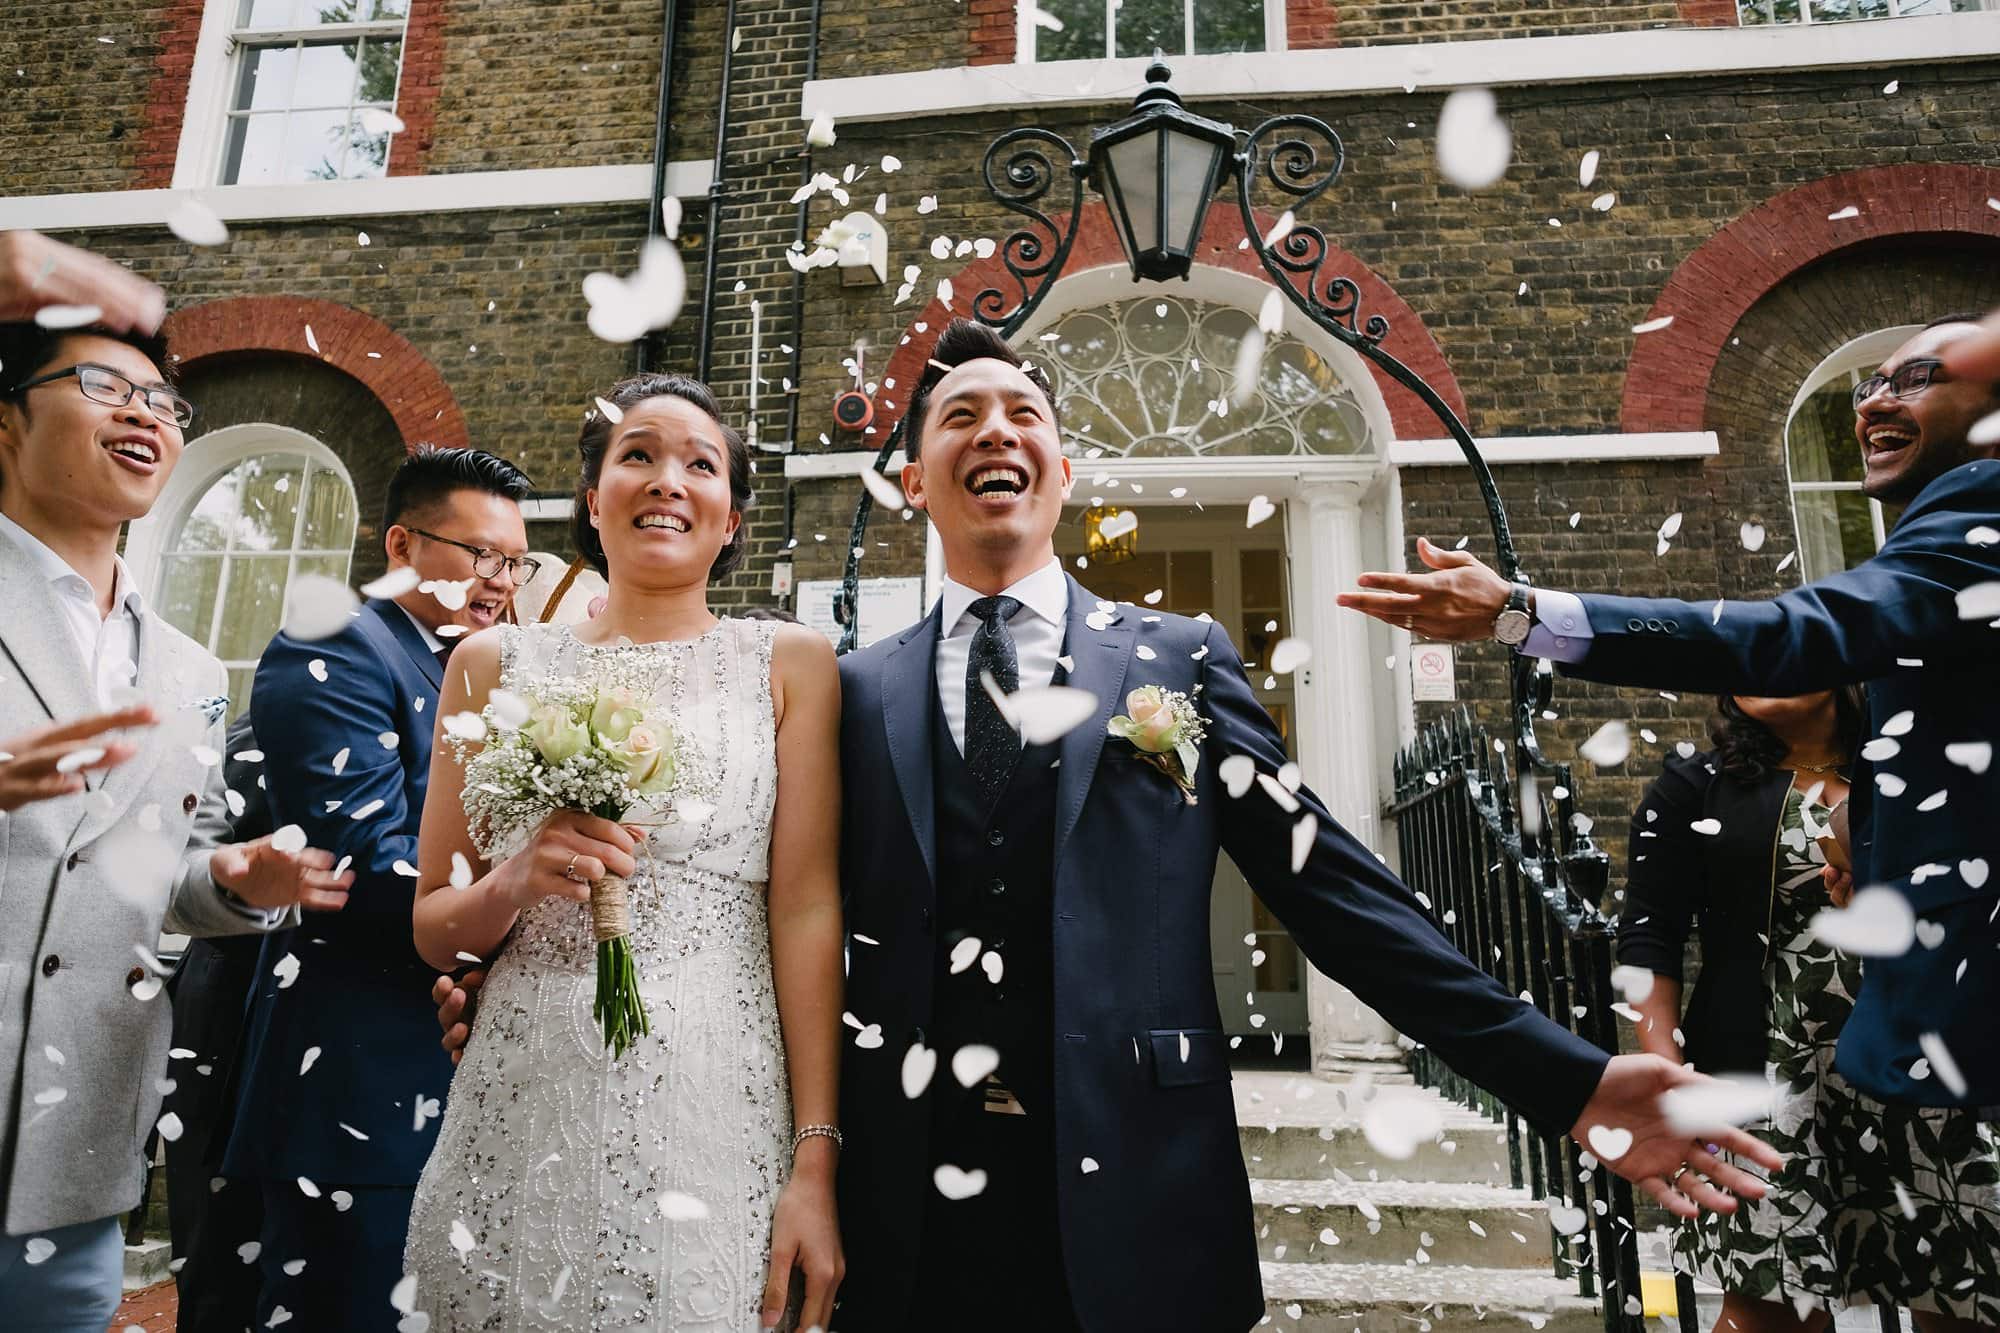 southwark wedding photographer hixter ym 057 - Yanin + Ming | Southwark